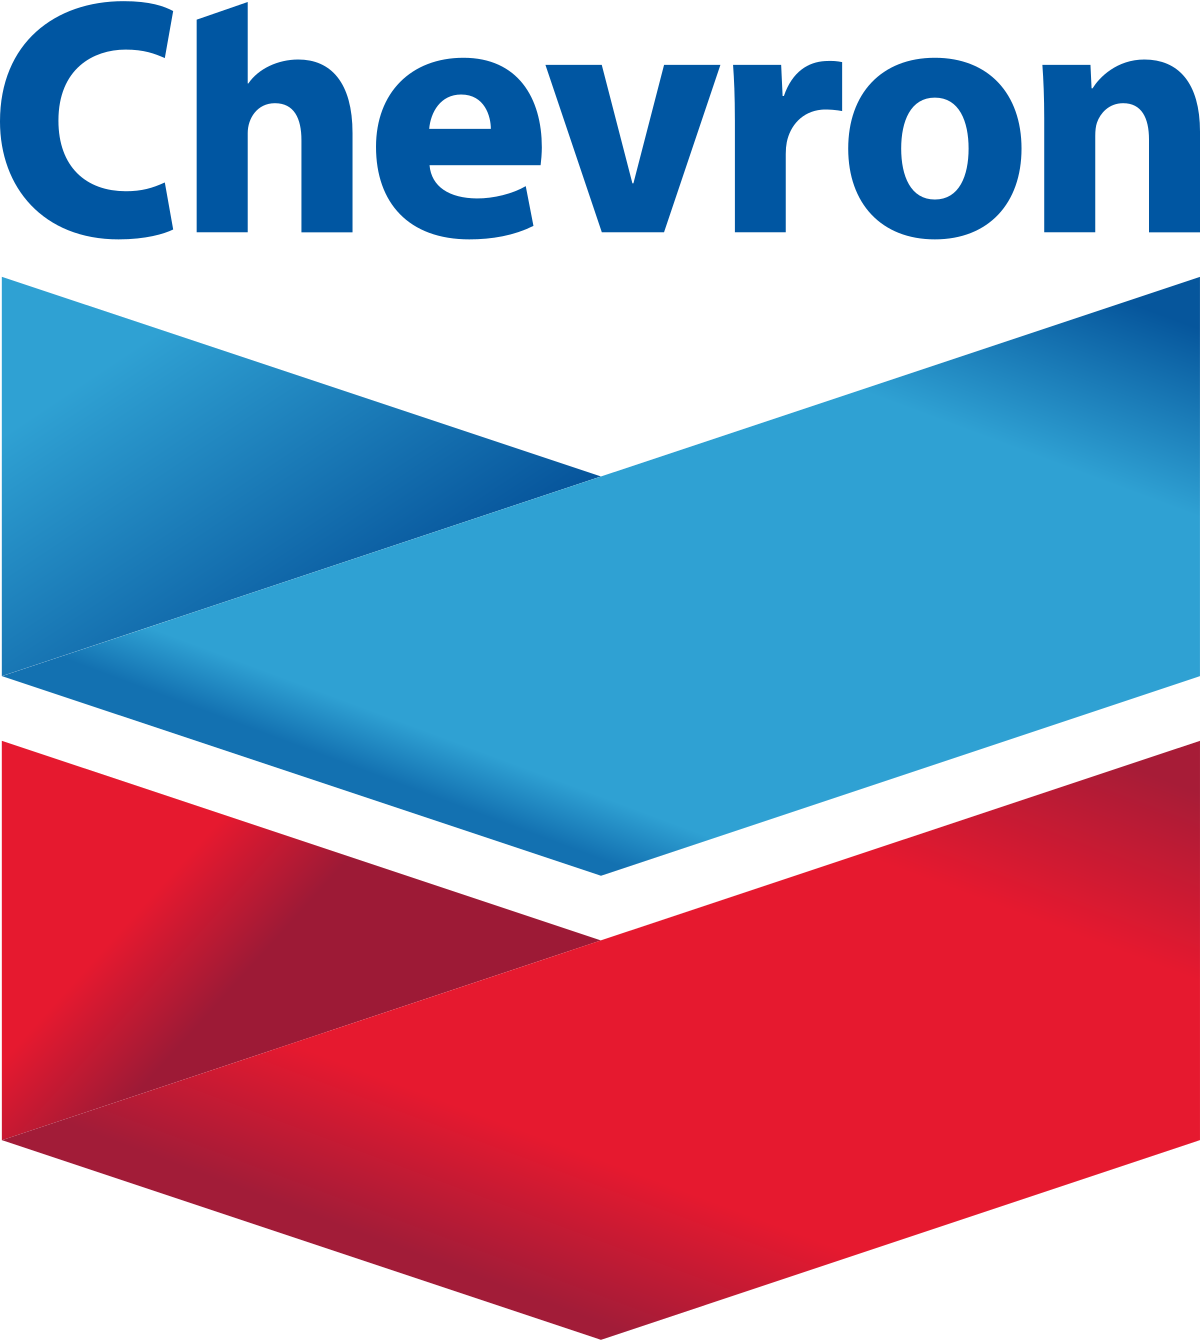 Chevron (midland Basin Assets)